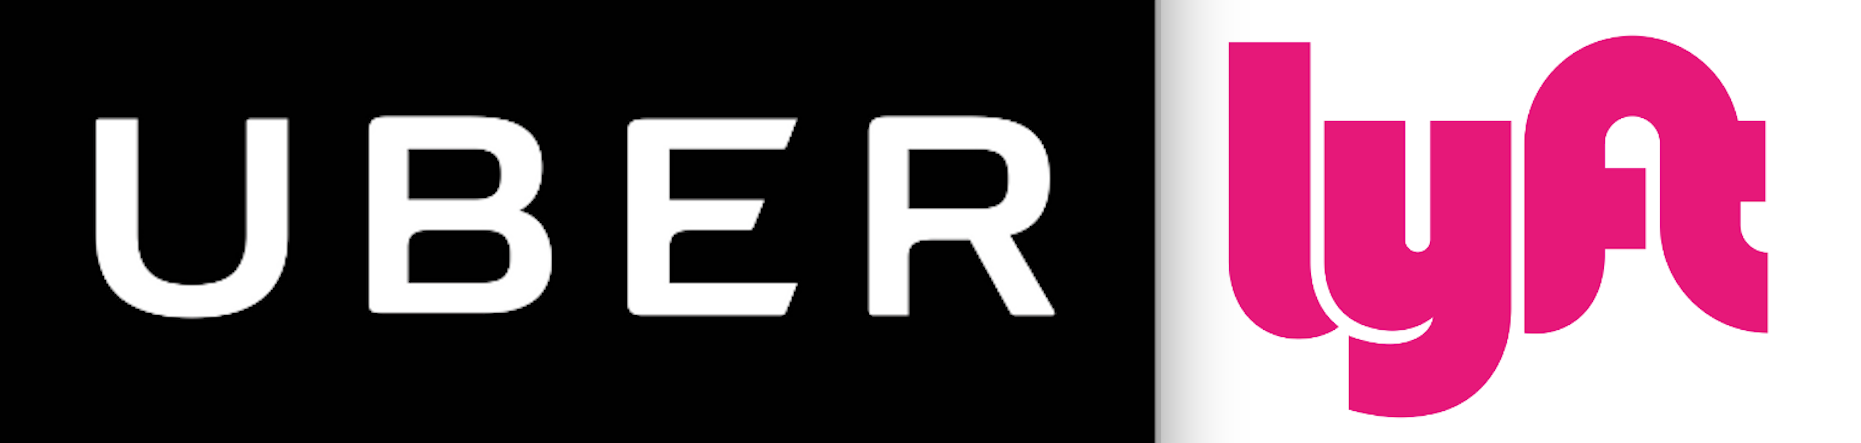 UBER and LYFT Logos